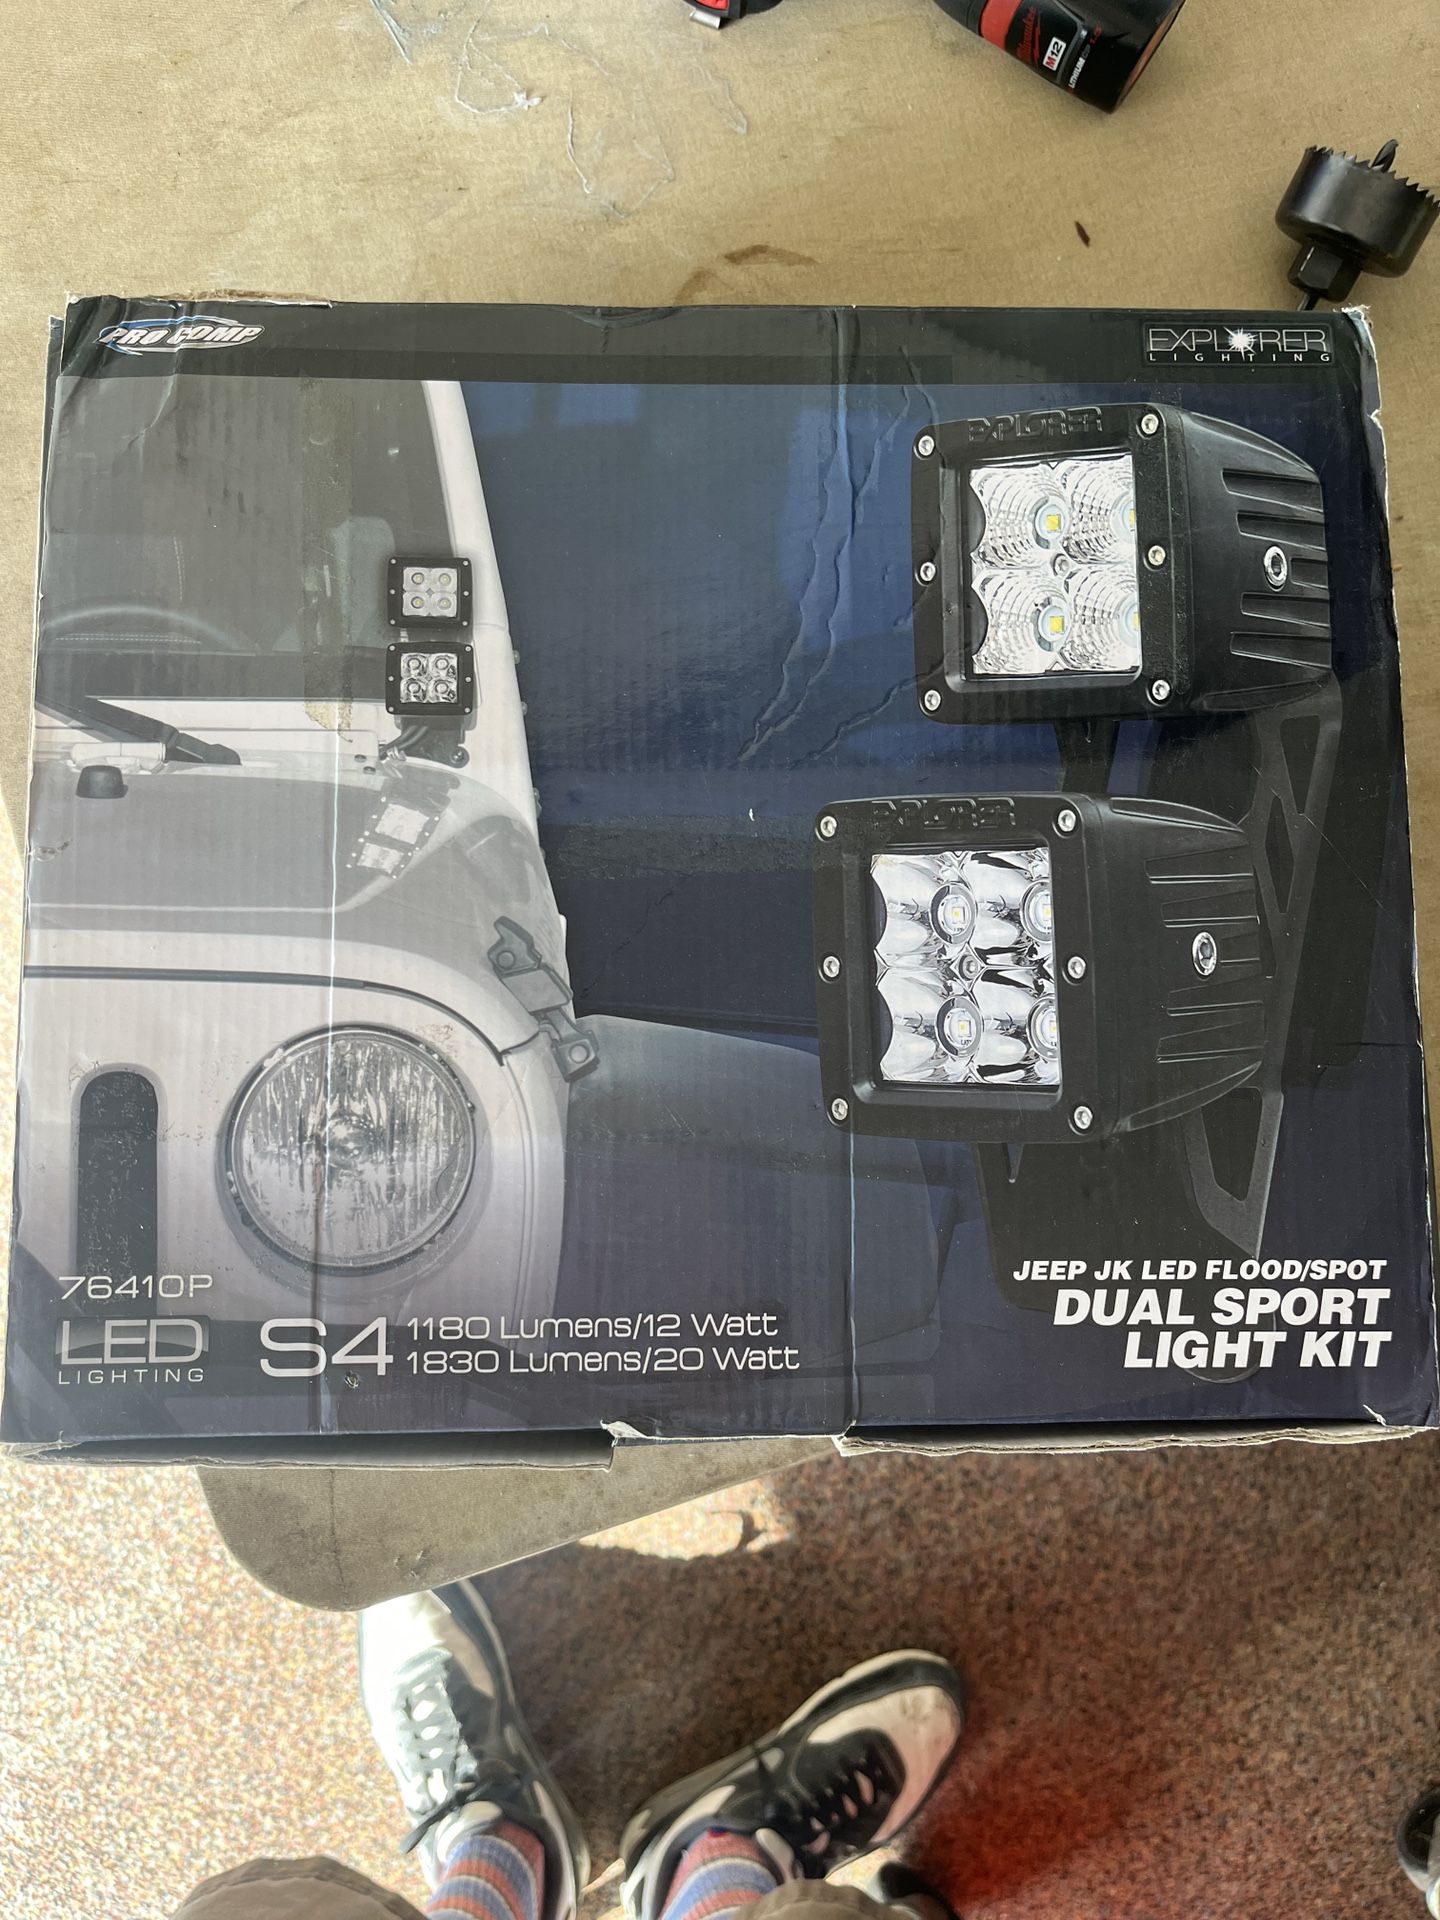 Jeep Wrangler JK Dual Sport light Kit